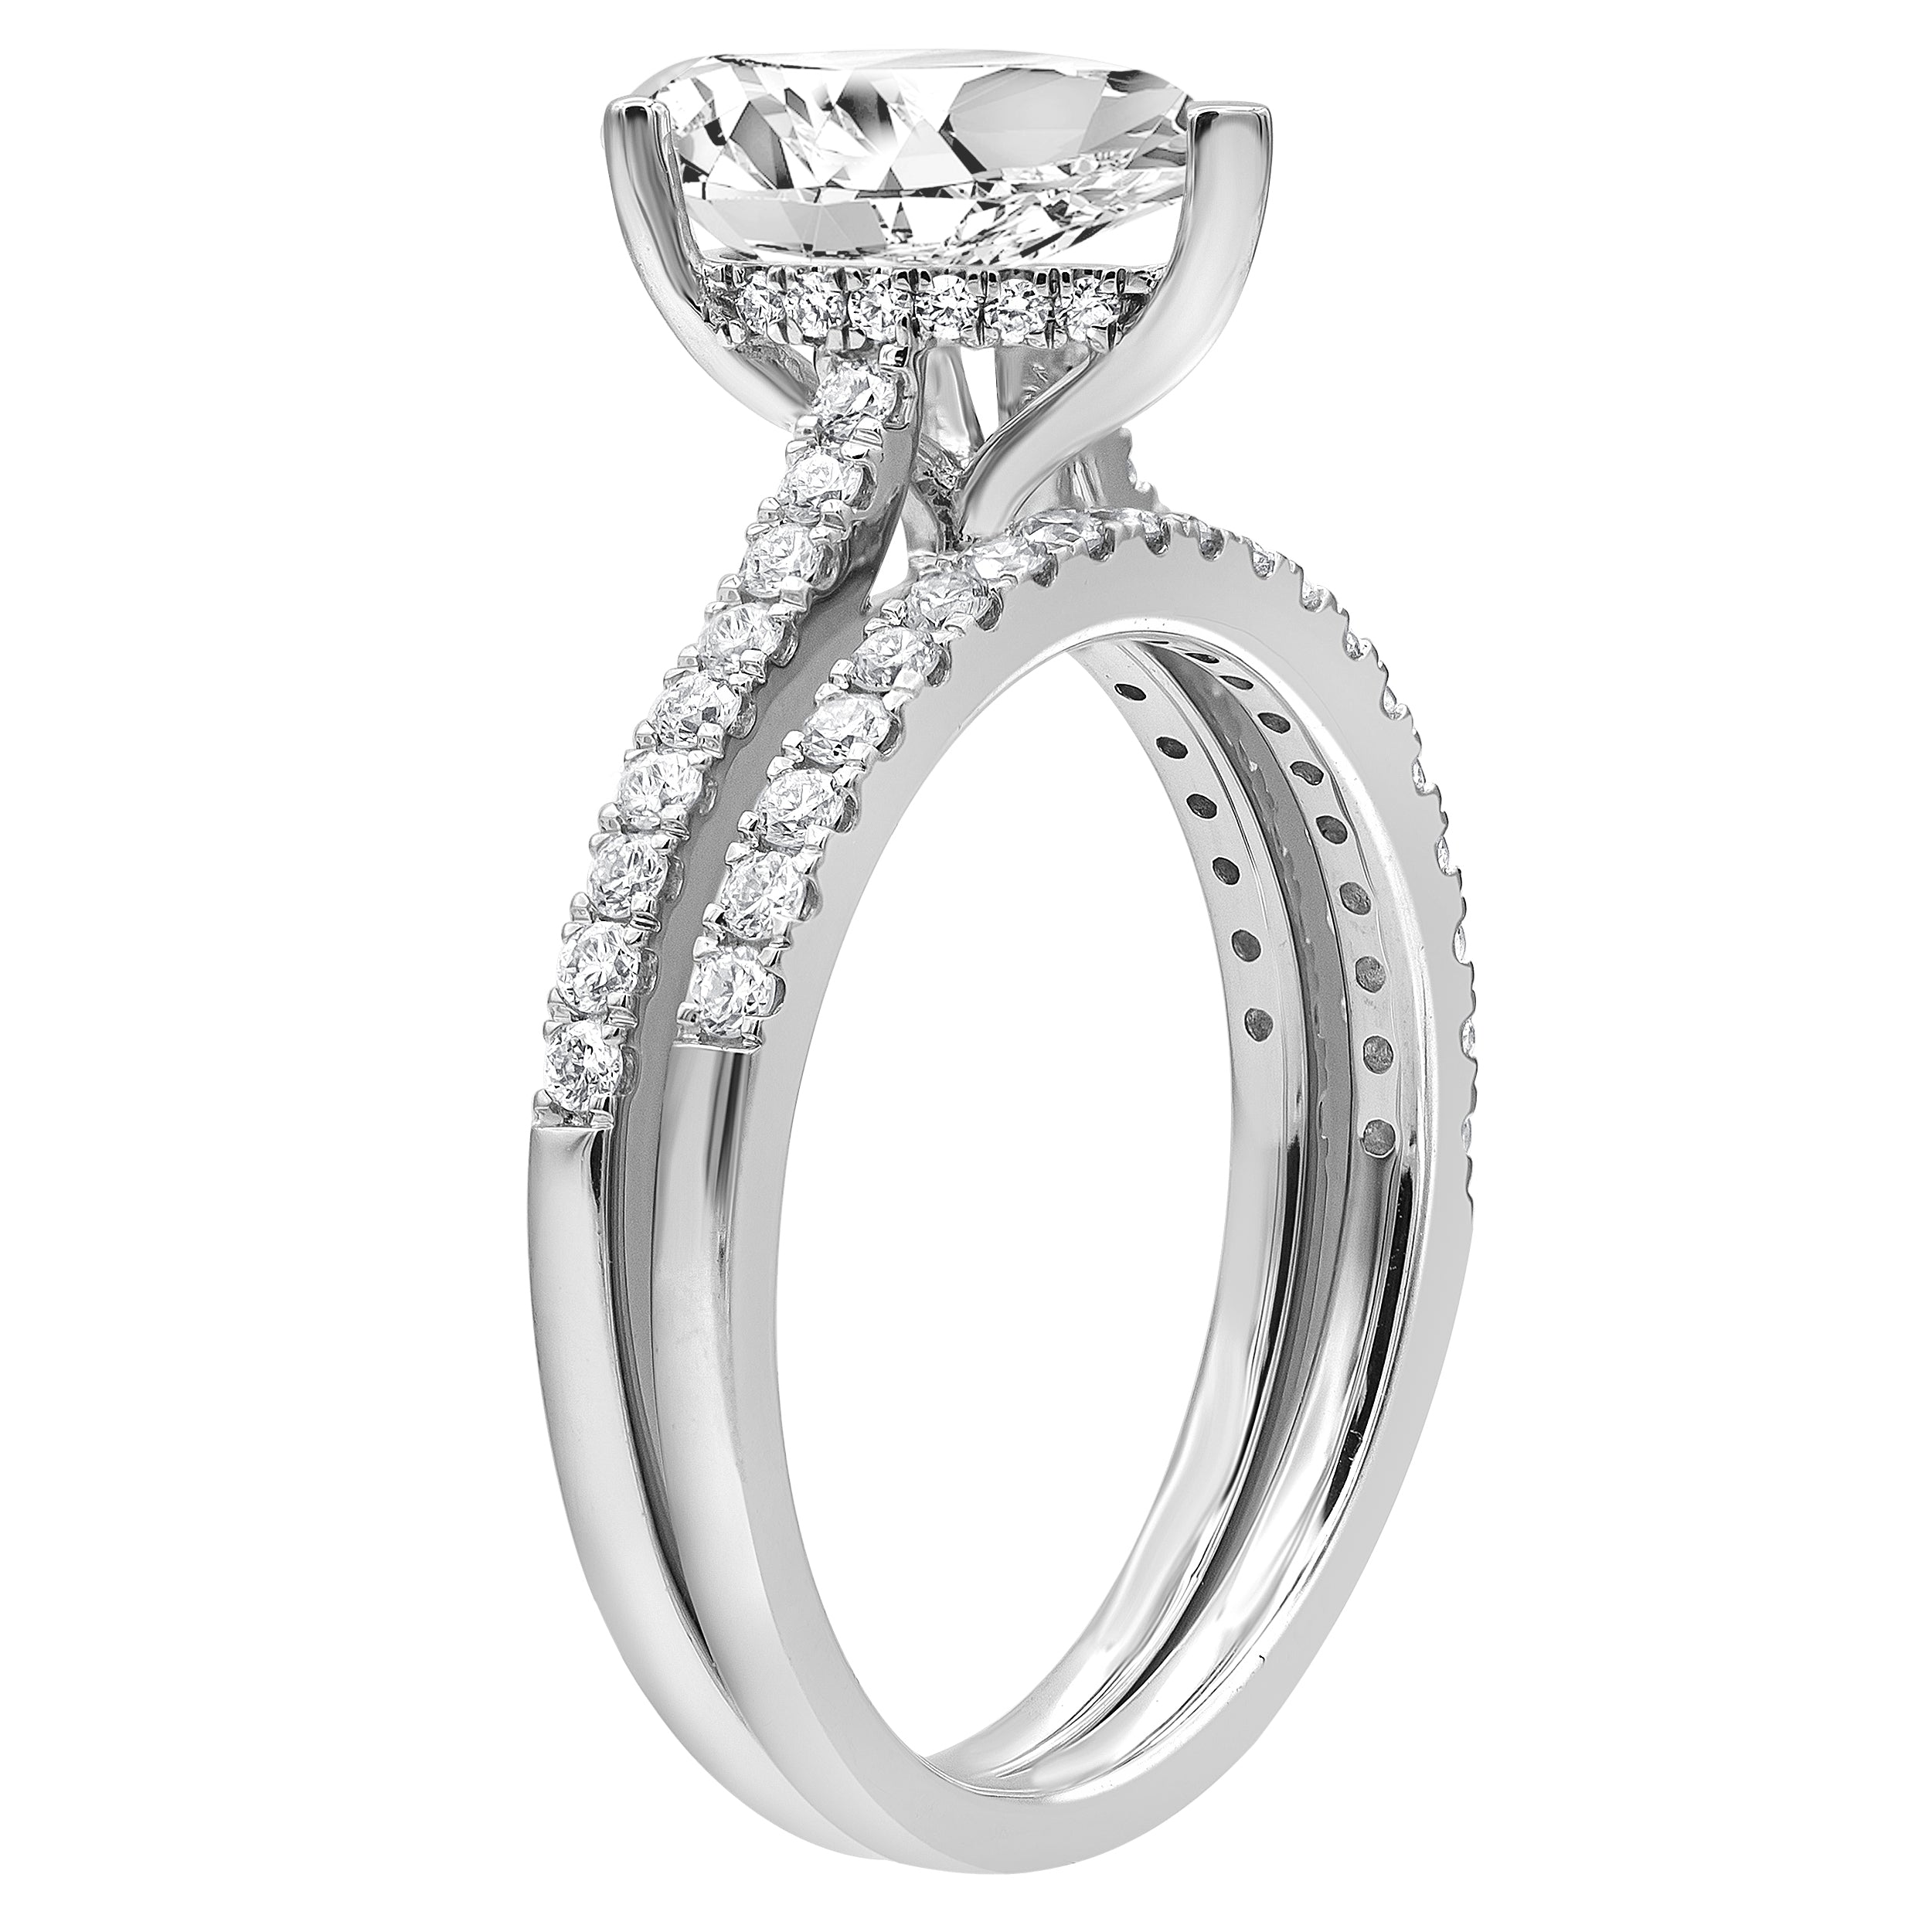 2.5 carat Hidden Halo Engagement Ring